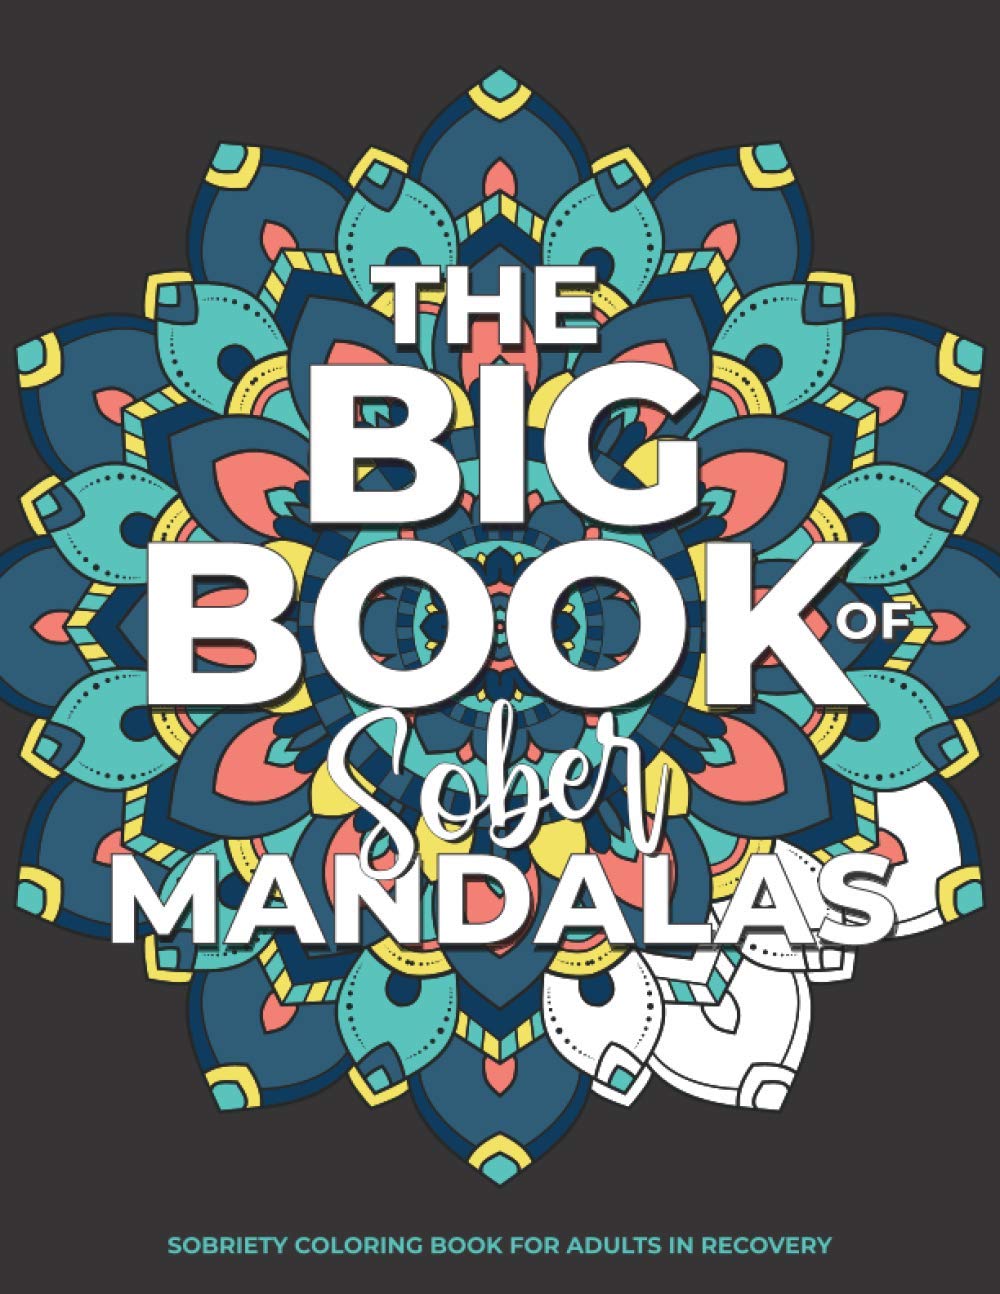 The Big Book of Sober Mandalas